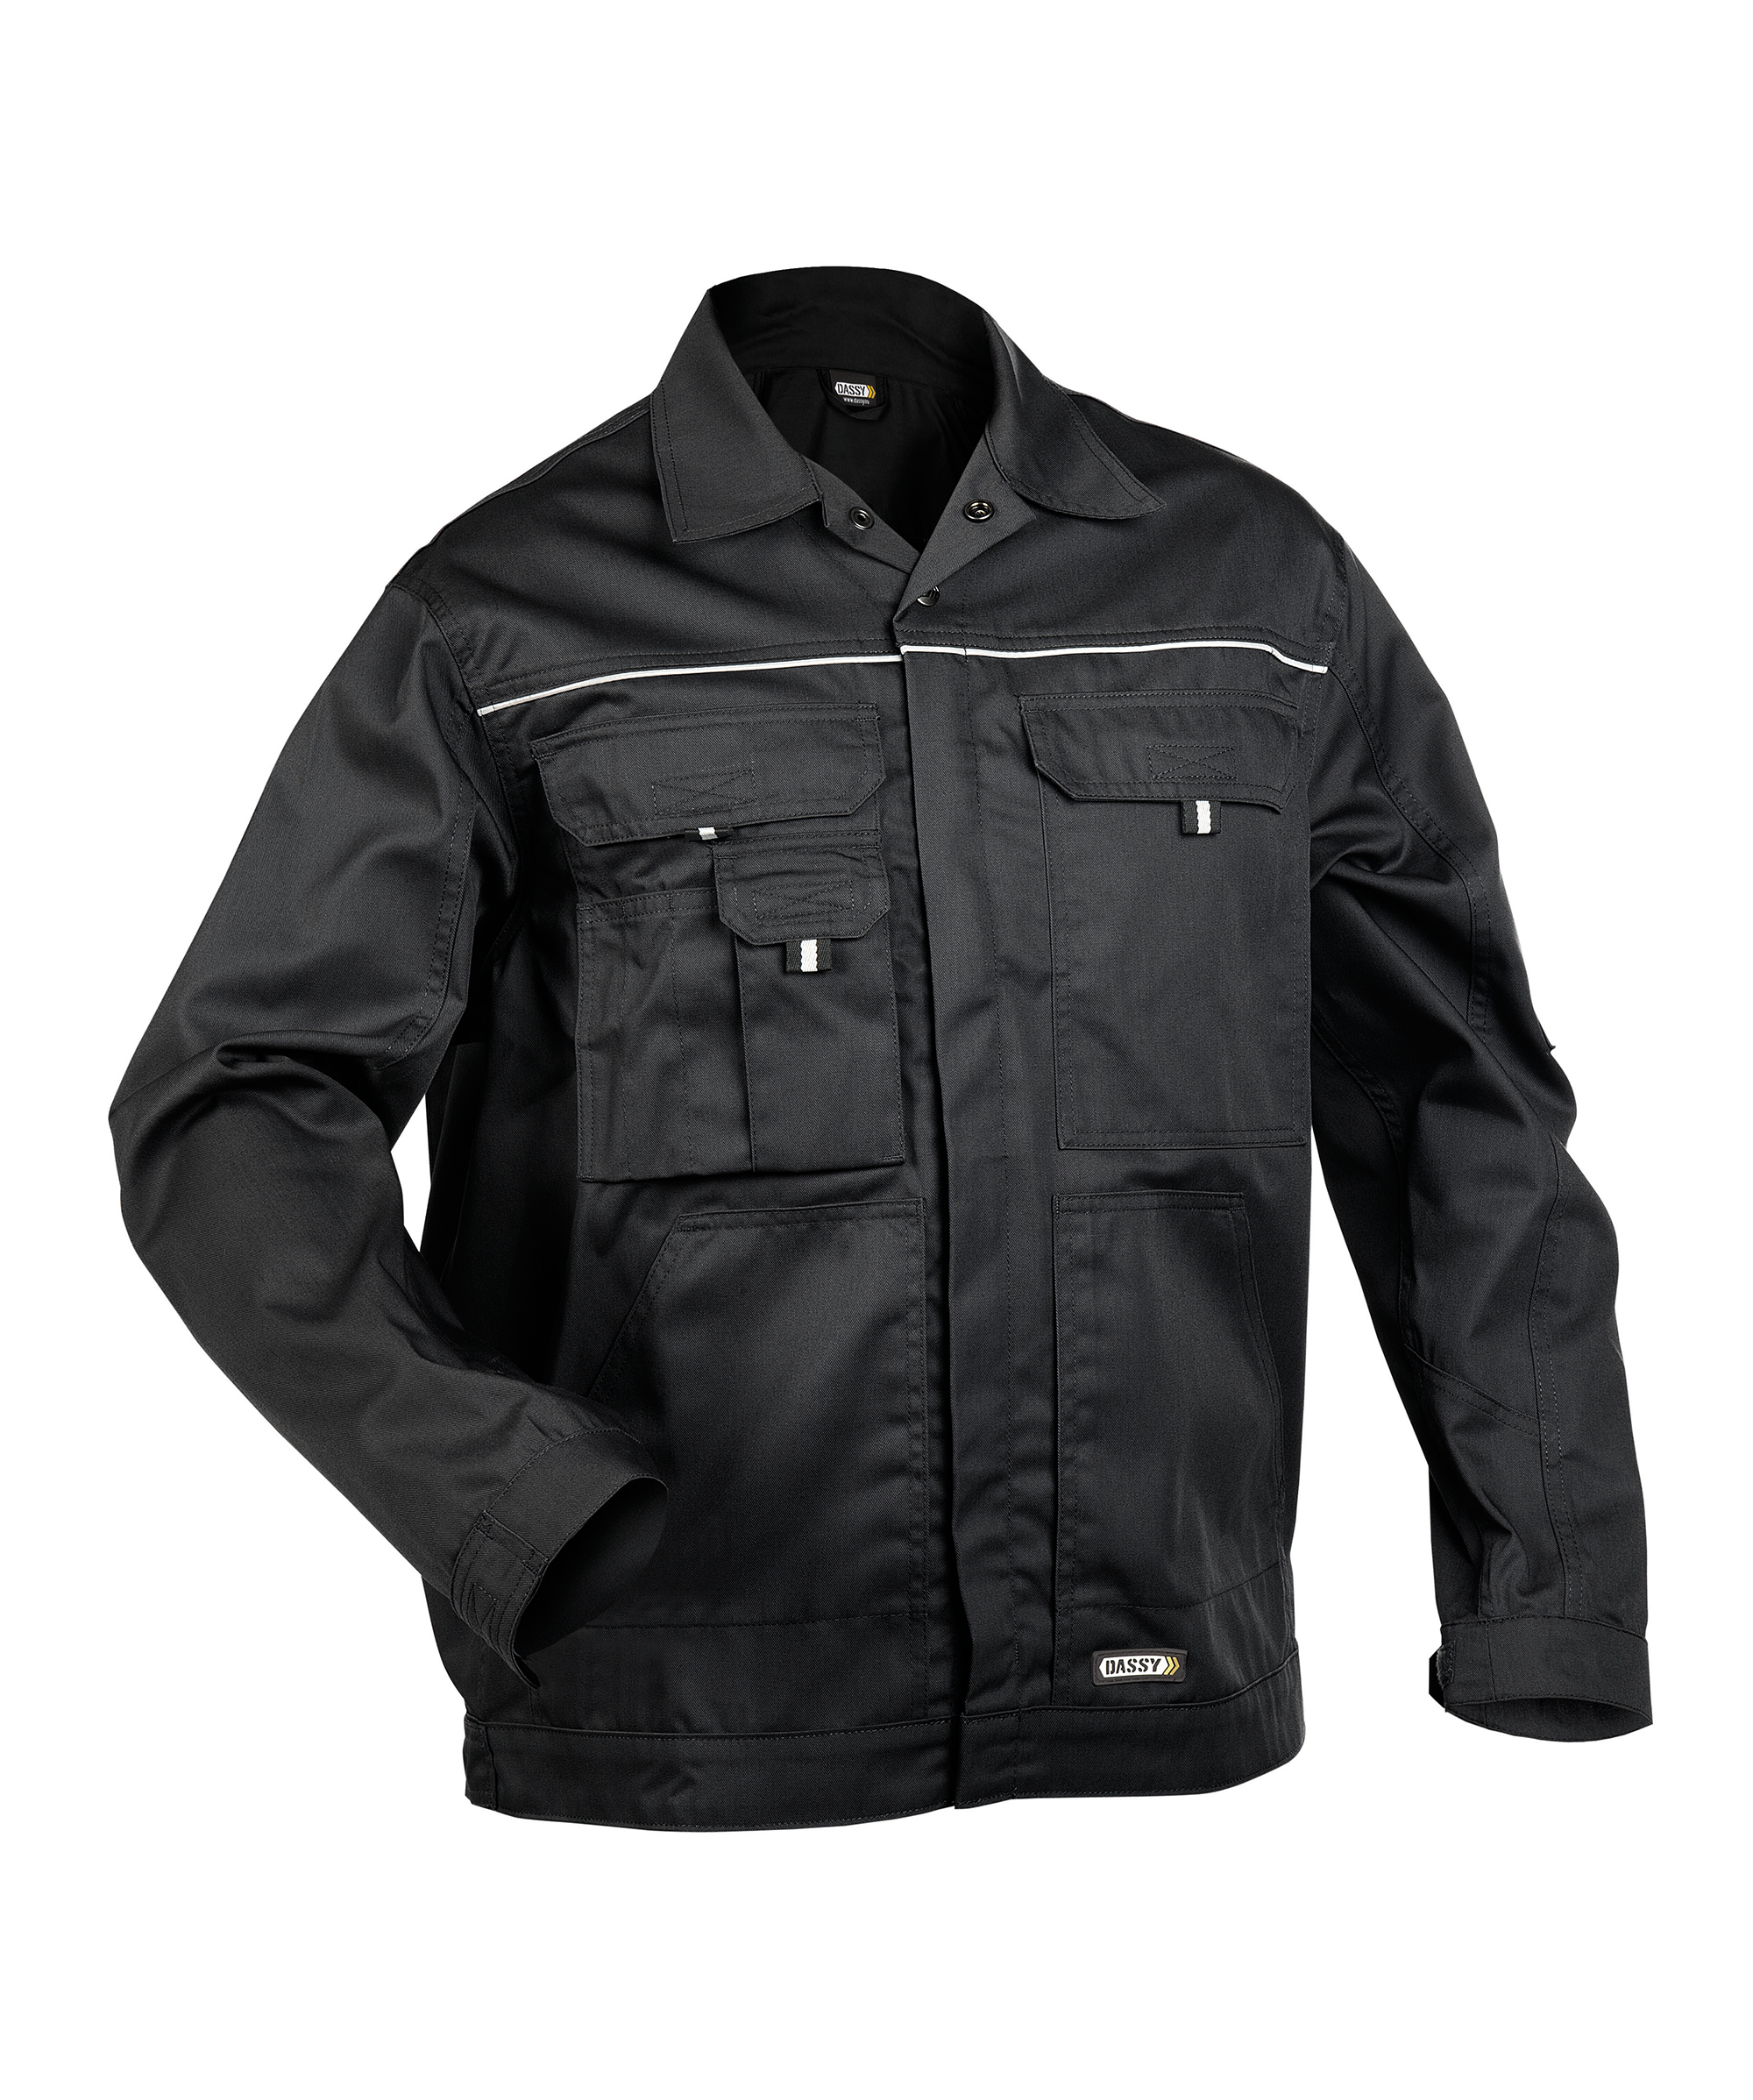 nouville_work-jacket_black_front.jpg